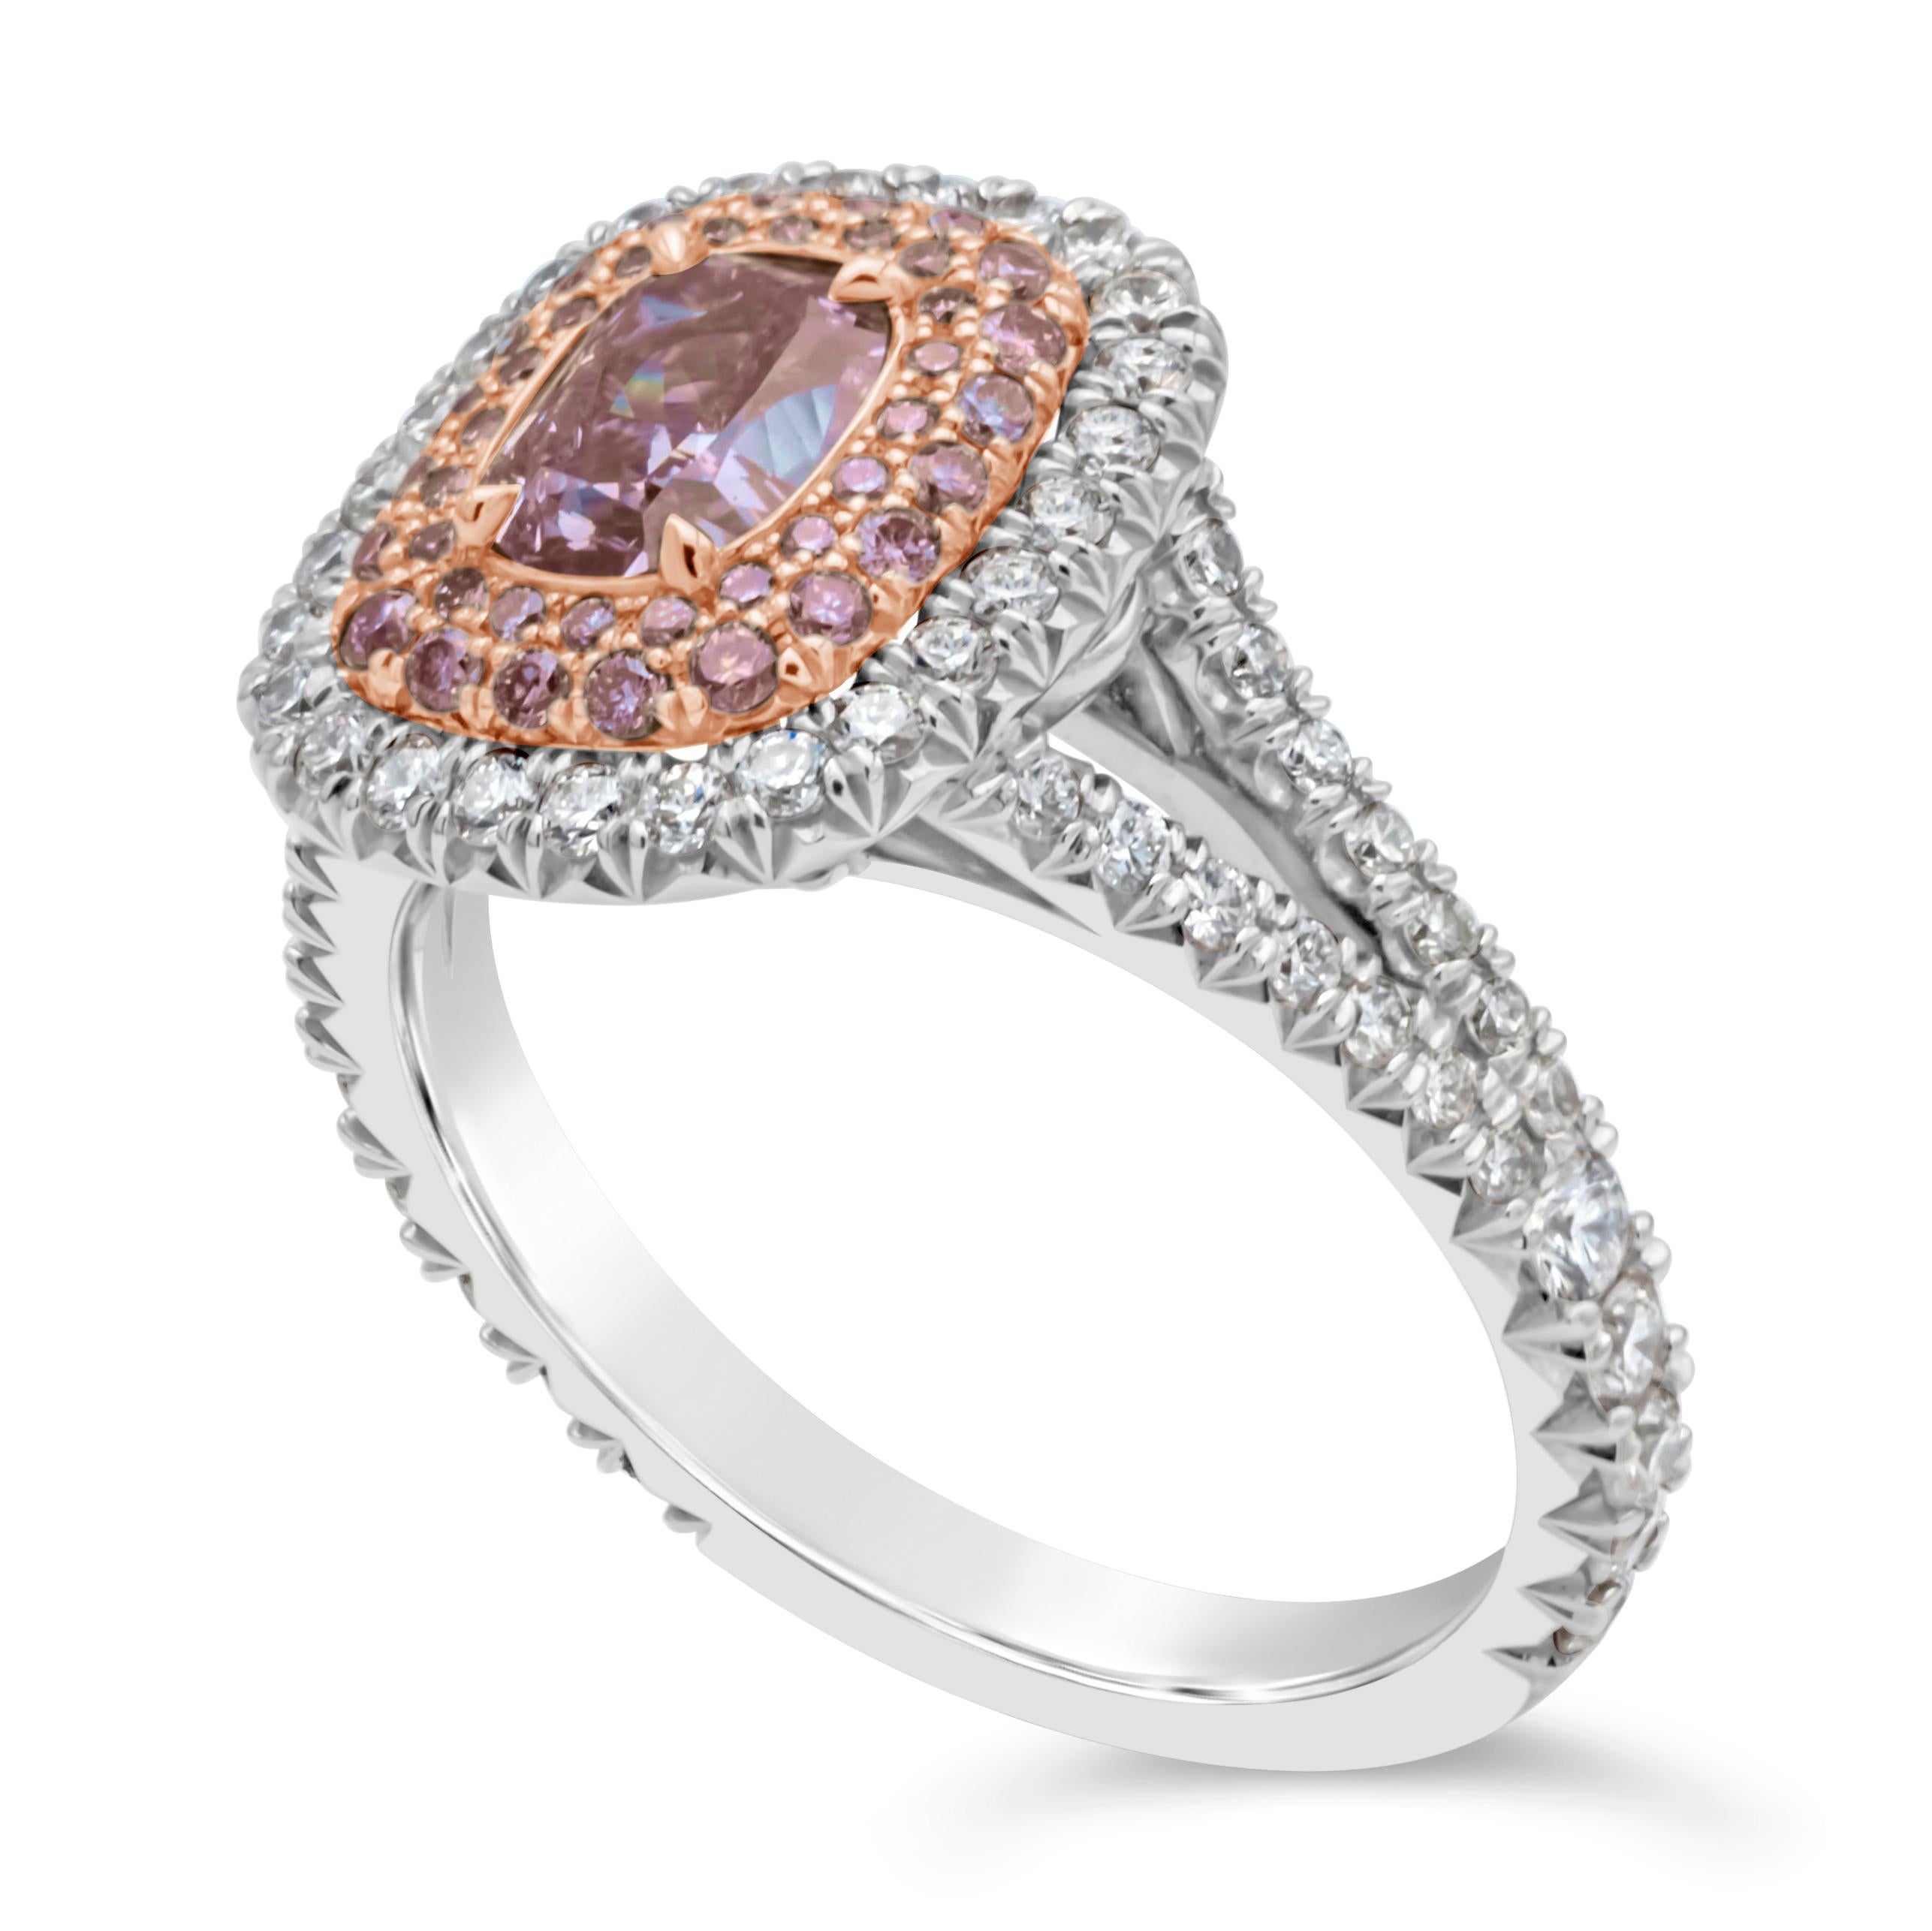 Oval Cut 1.07 Carat Oval Shape Fancy Purplish Pink Diamond Triple Halo Engagement Ring For Sale